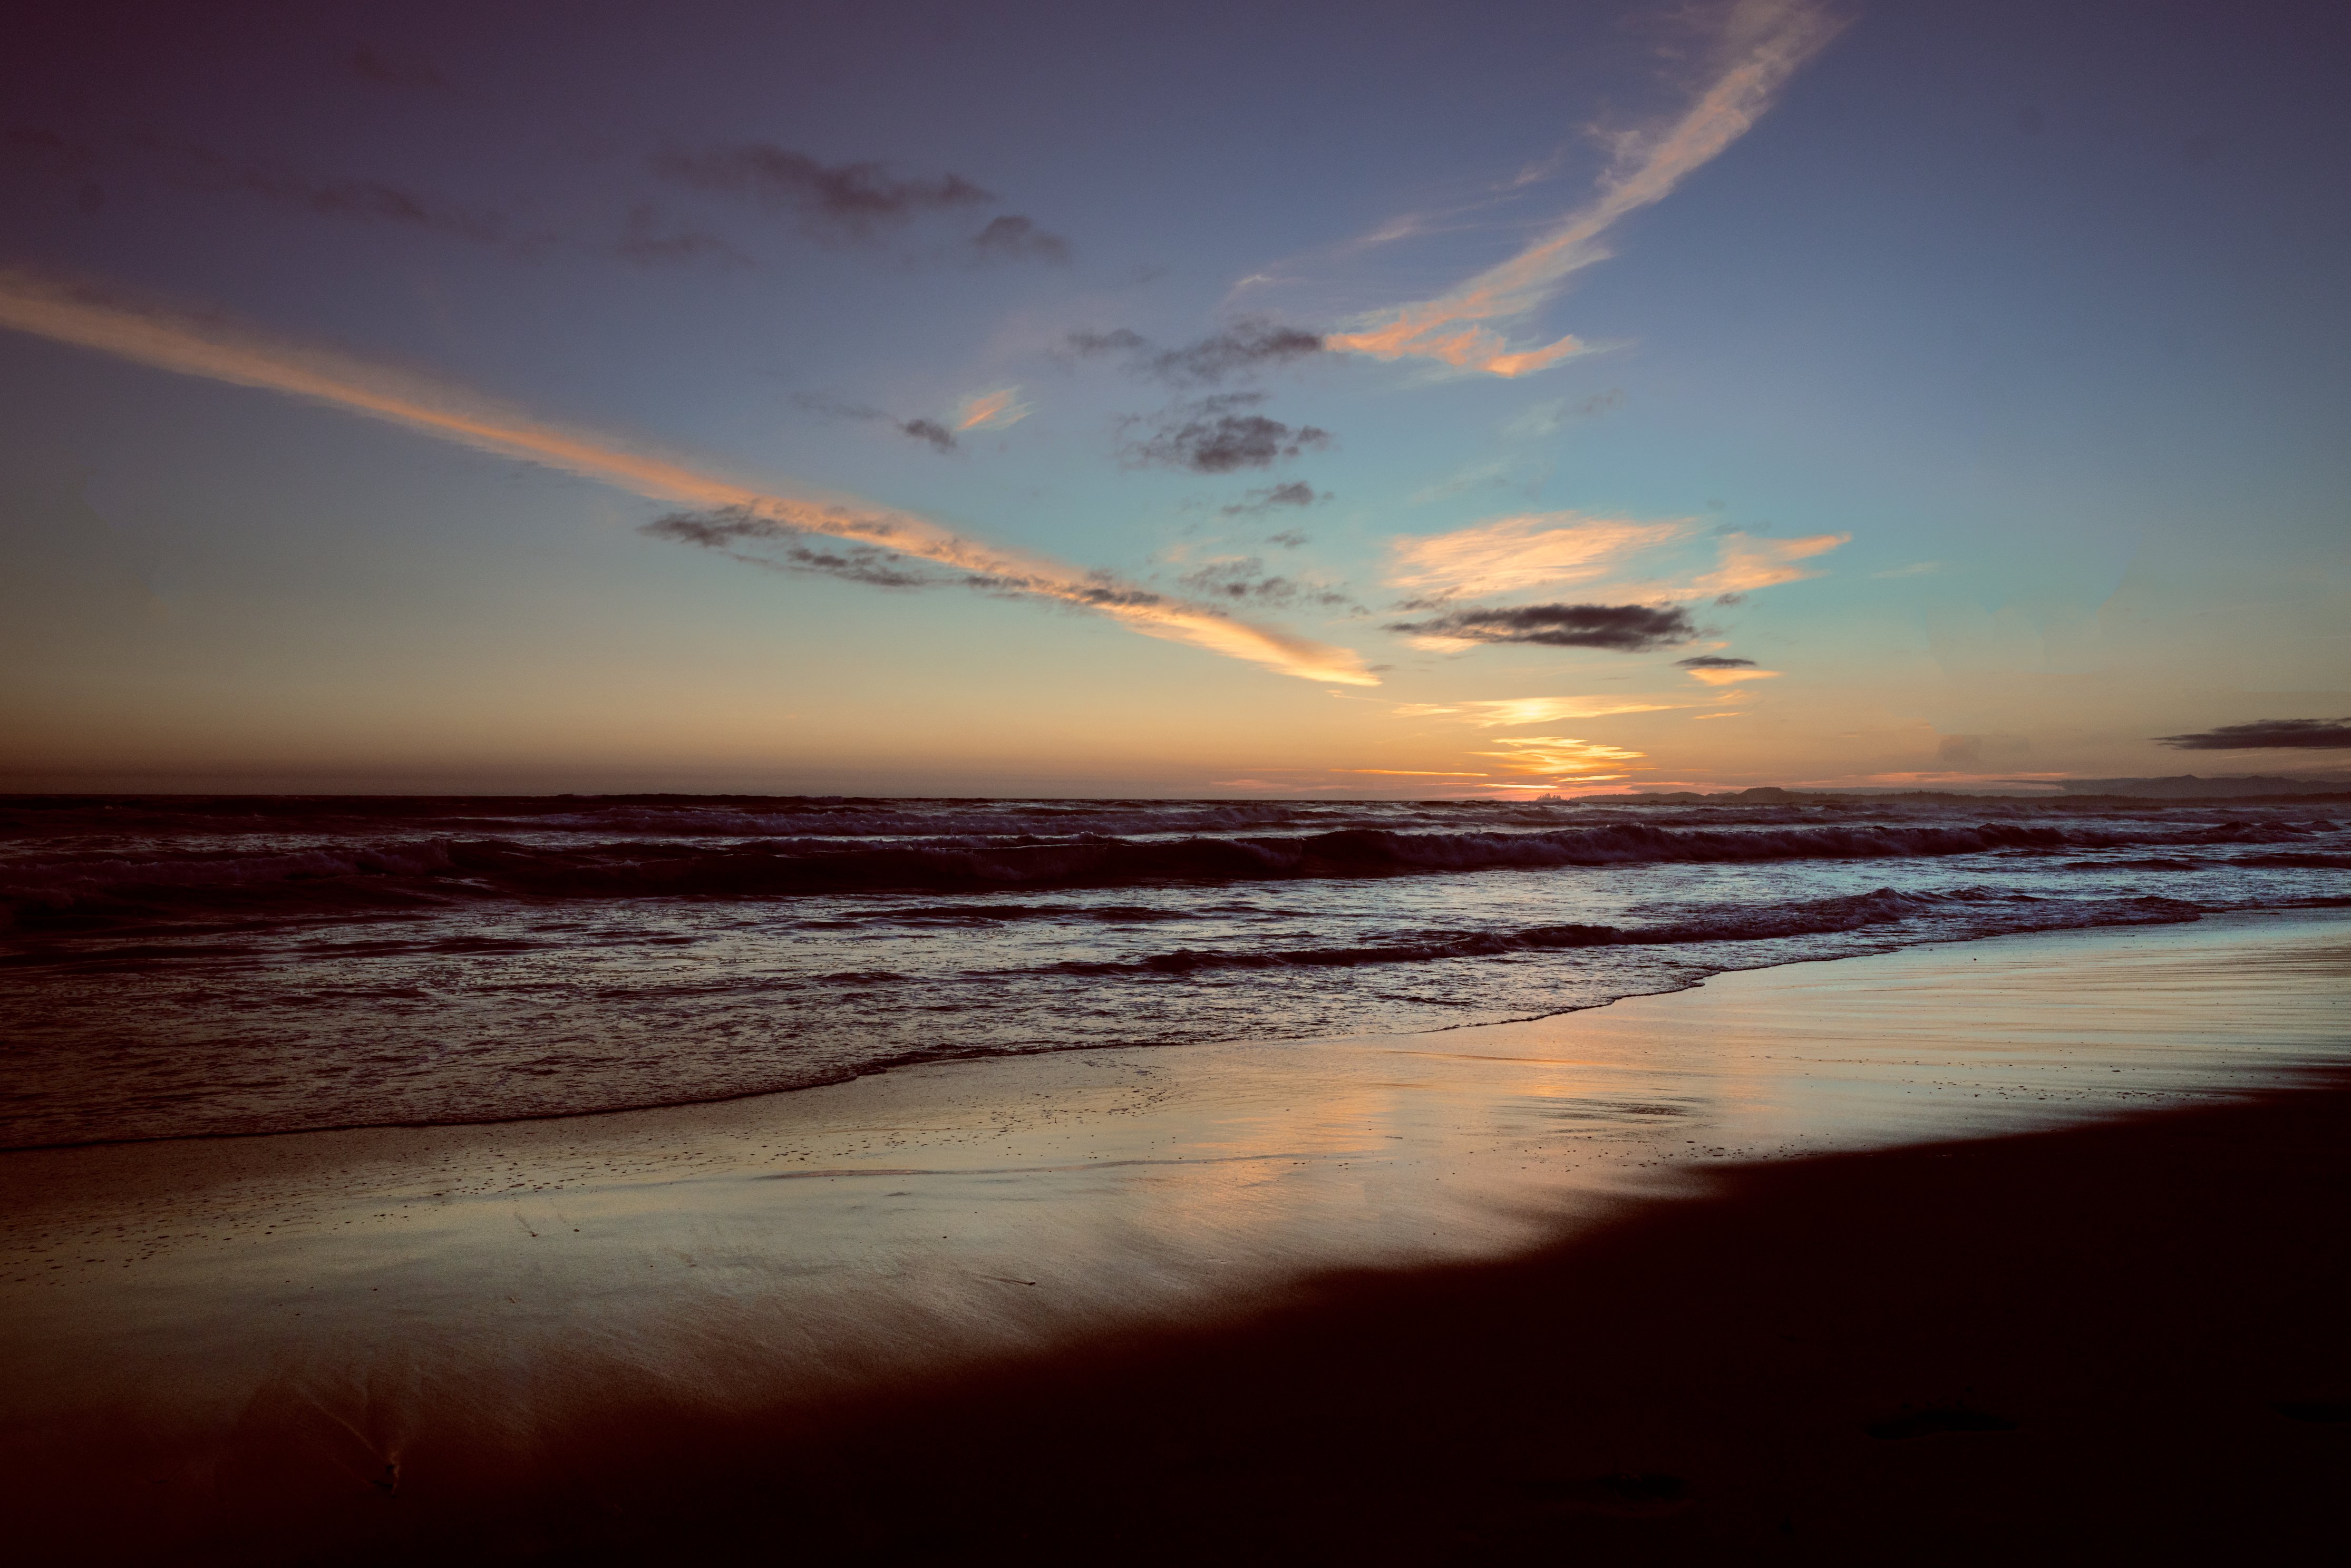 Beach at Sunset by Nicole De Khors